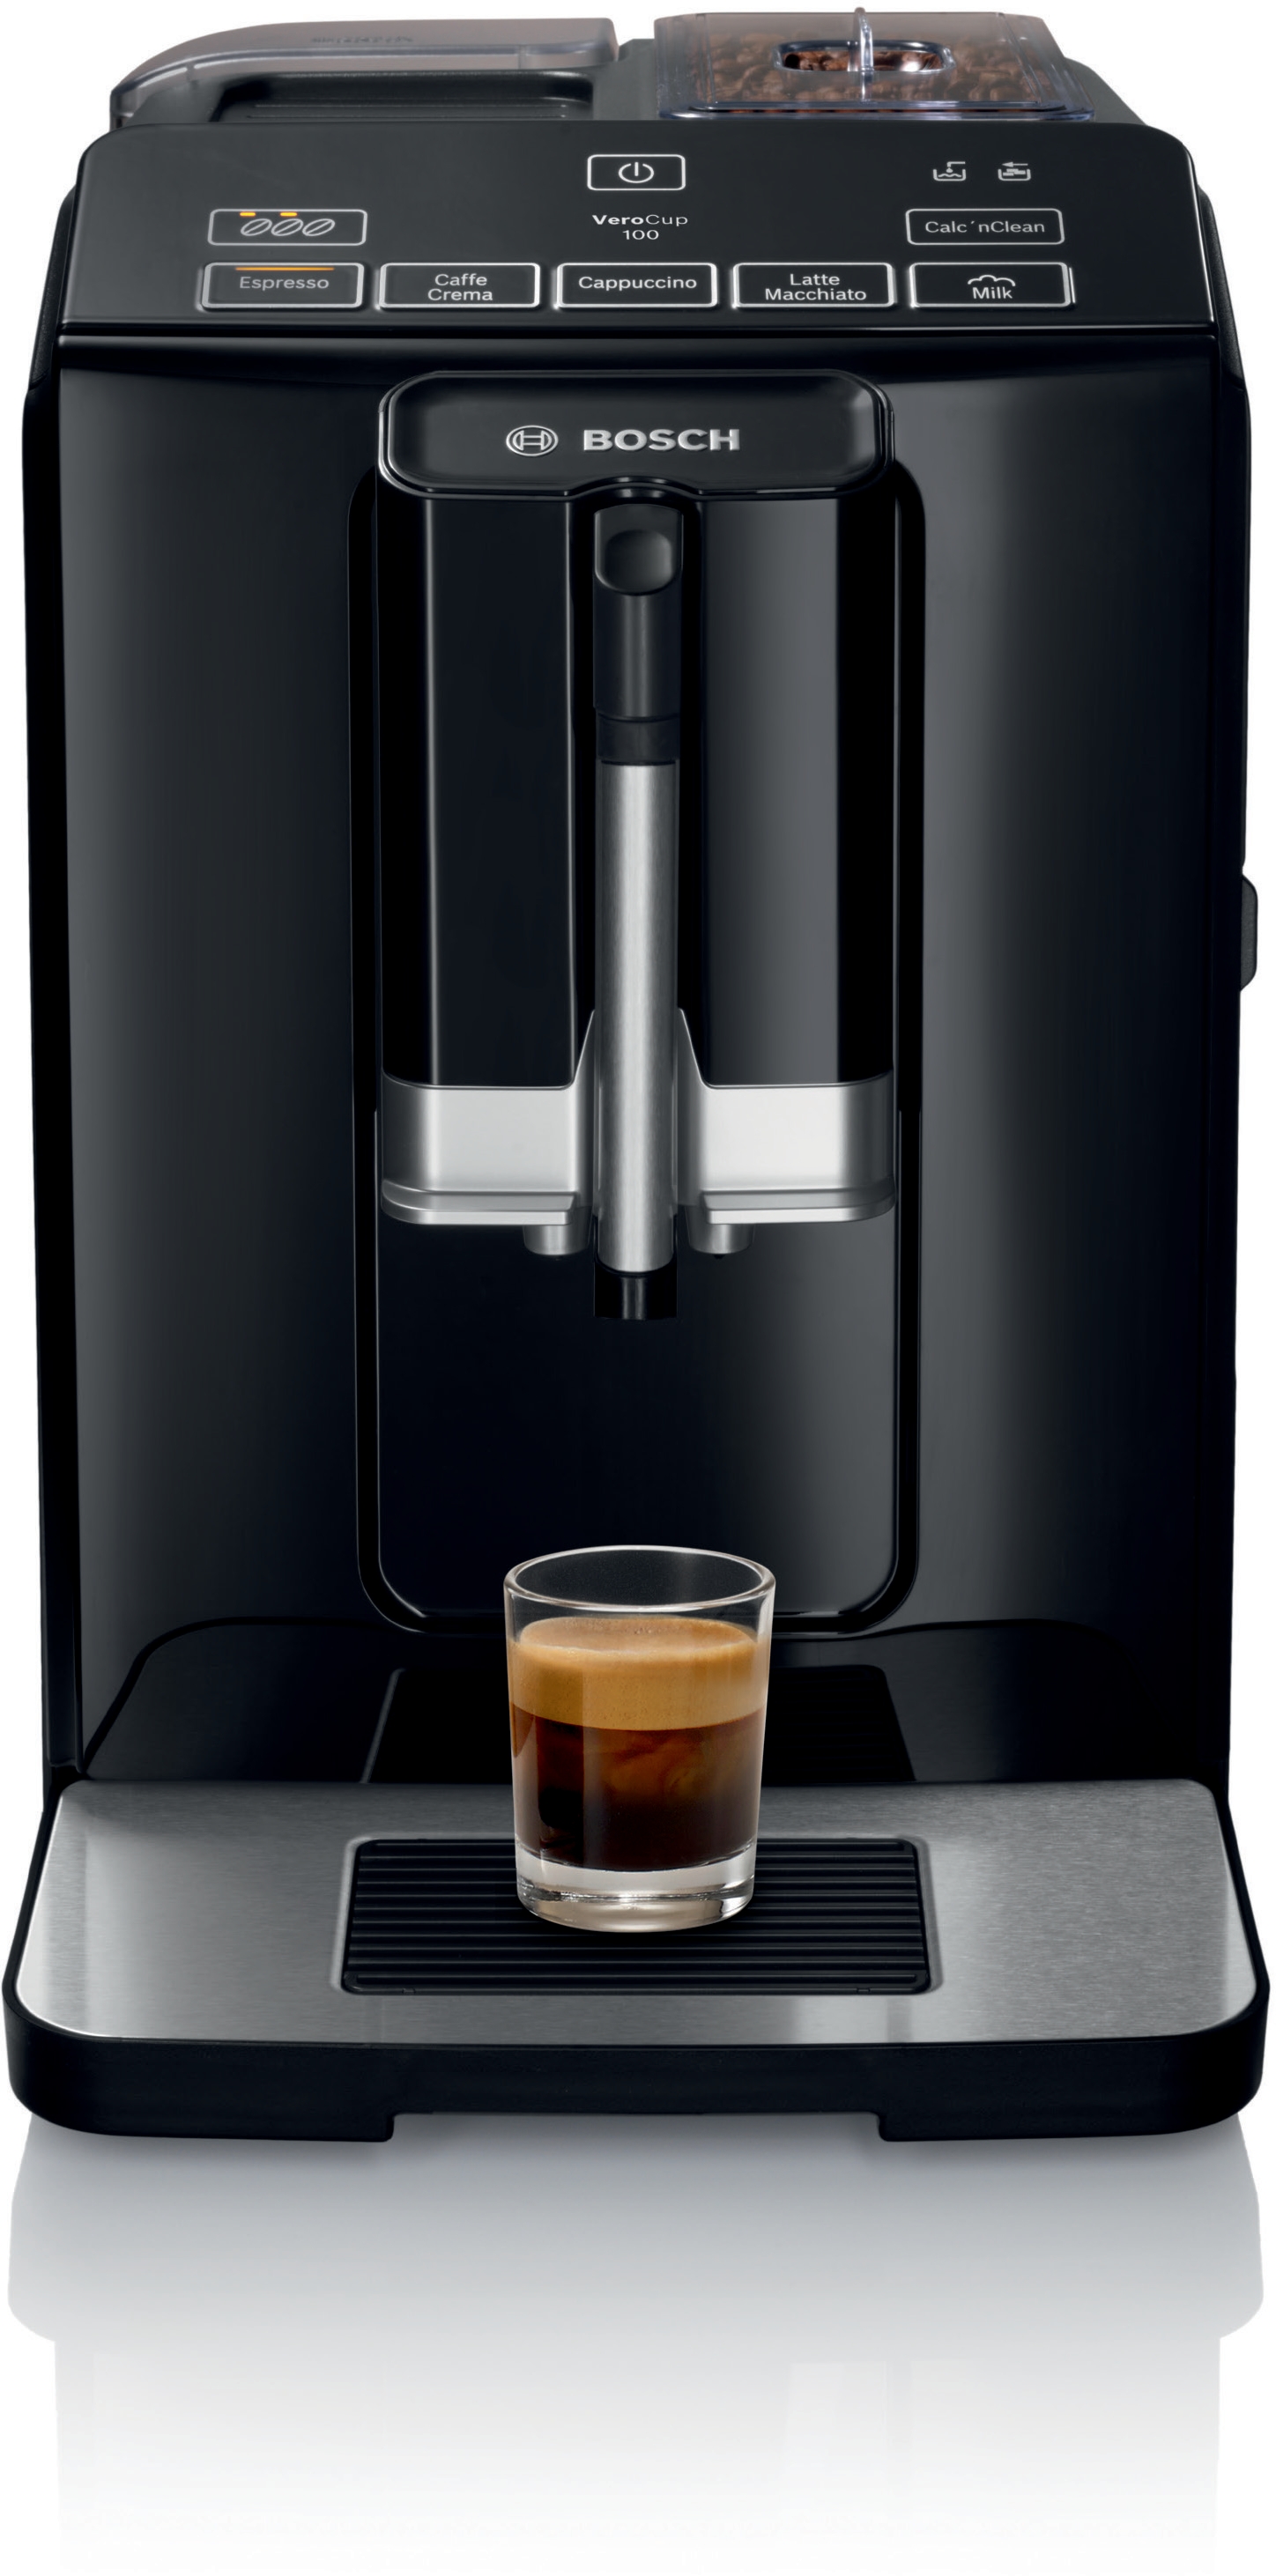 Aparat za kafu, TIS30129RW Potpuno automatizovan, Verocup 100, Funkcija samočišćenja, 1300 W